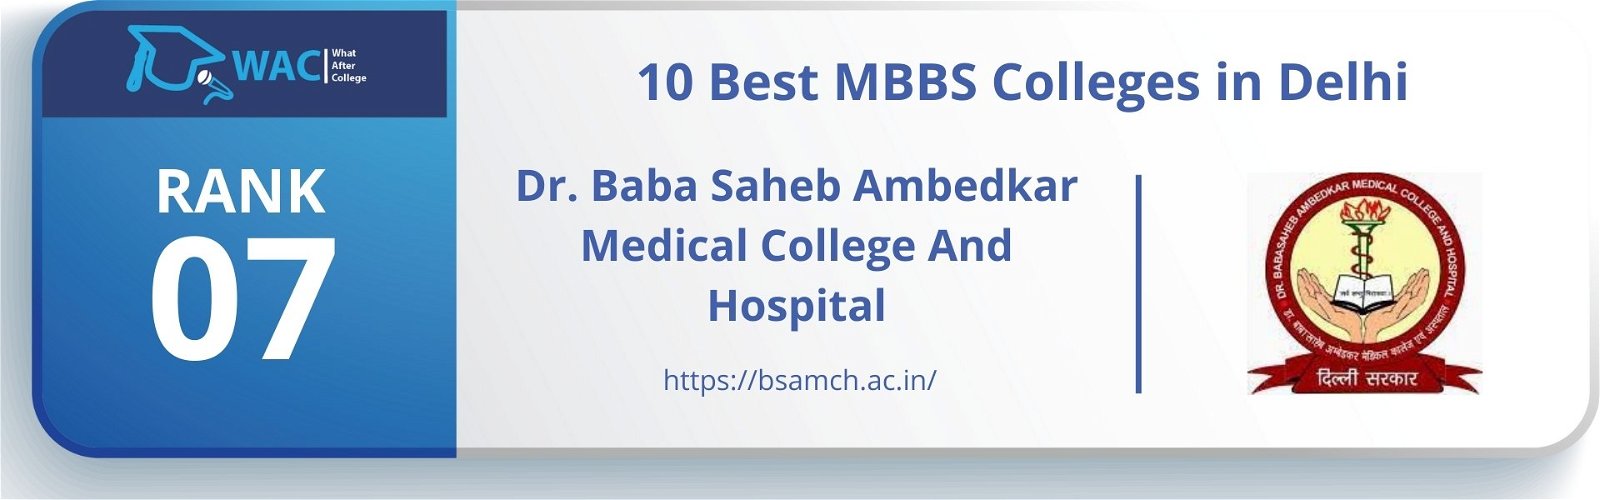 medical college in delhi for mbbs